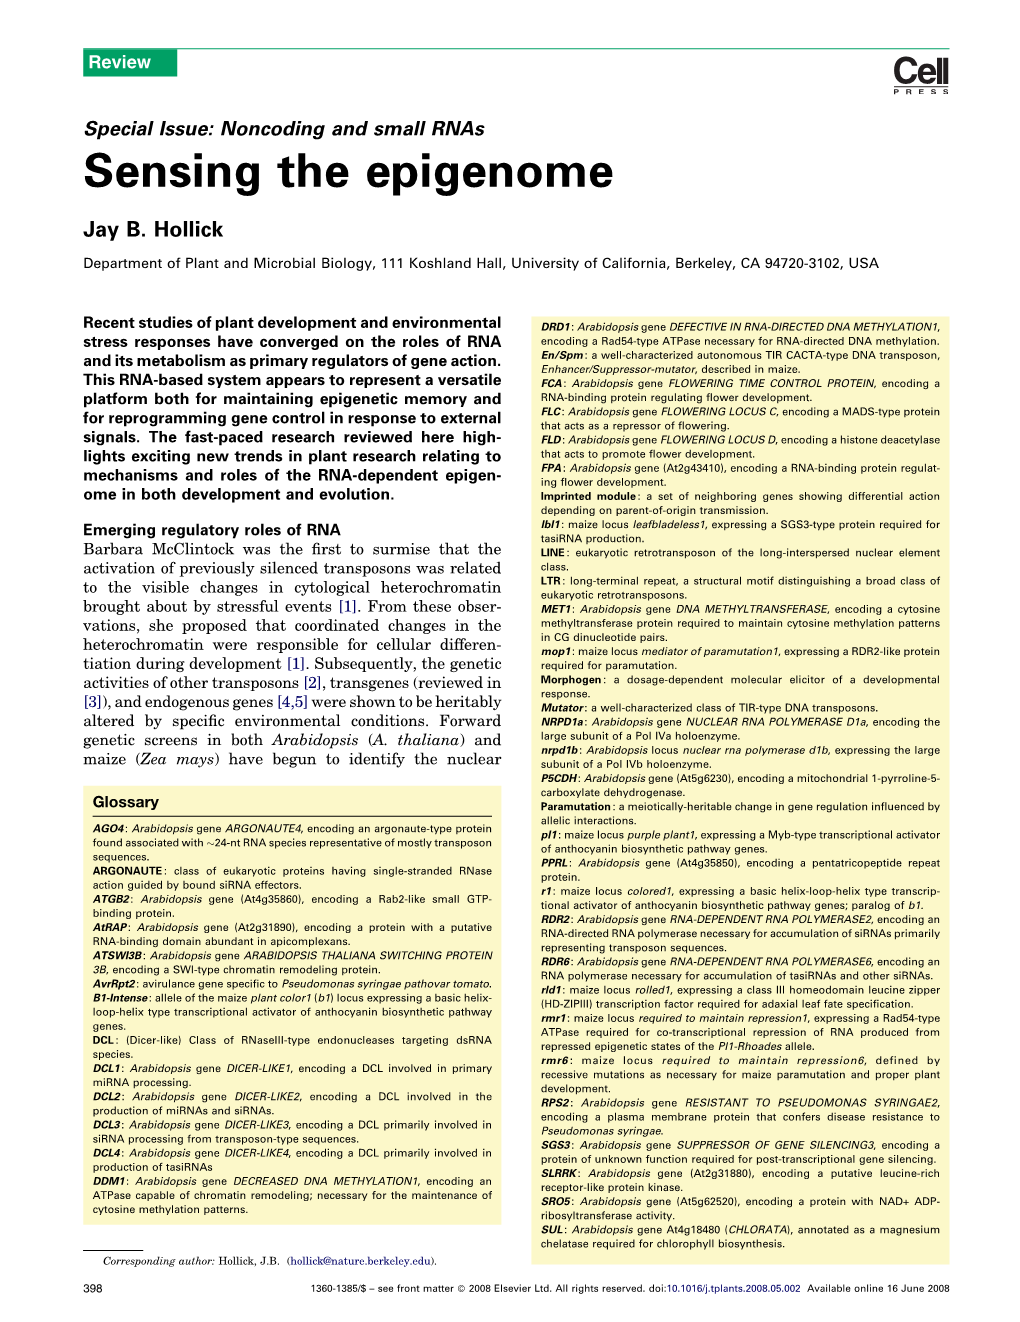 Sensing the Epigenome